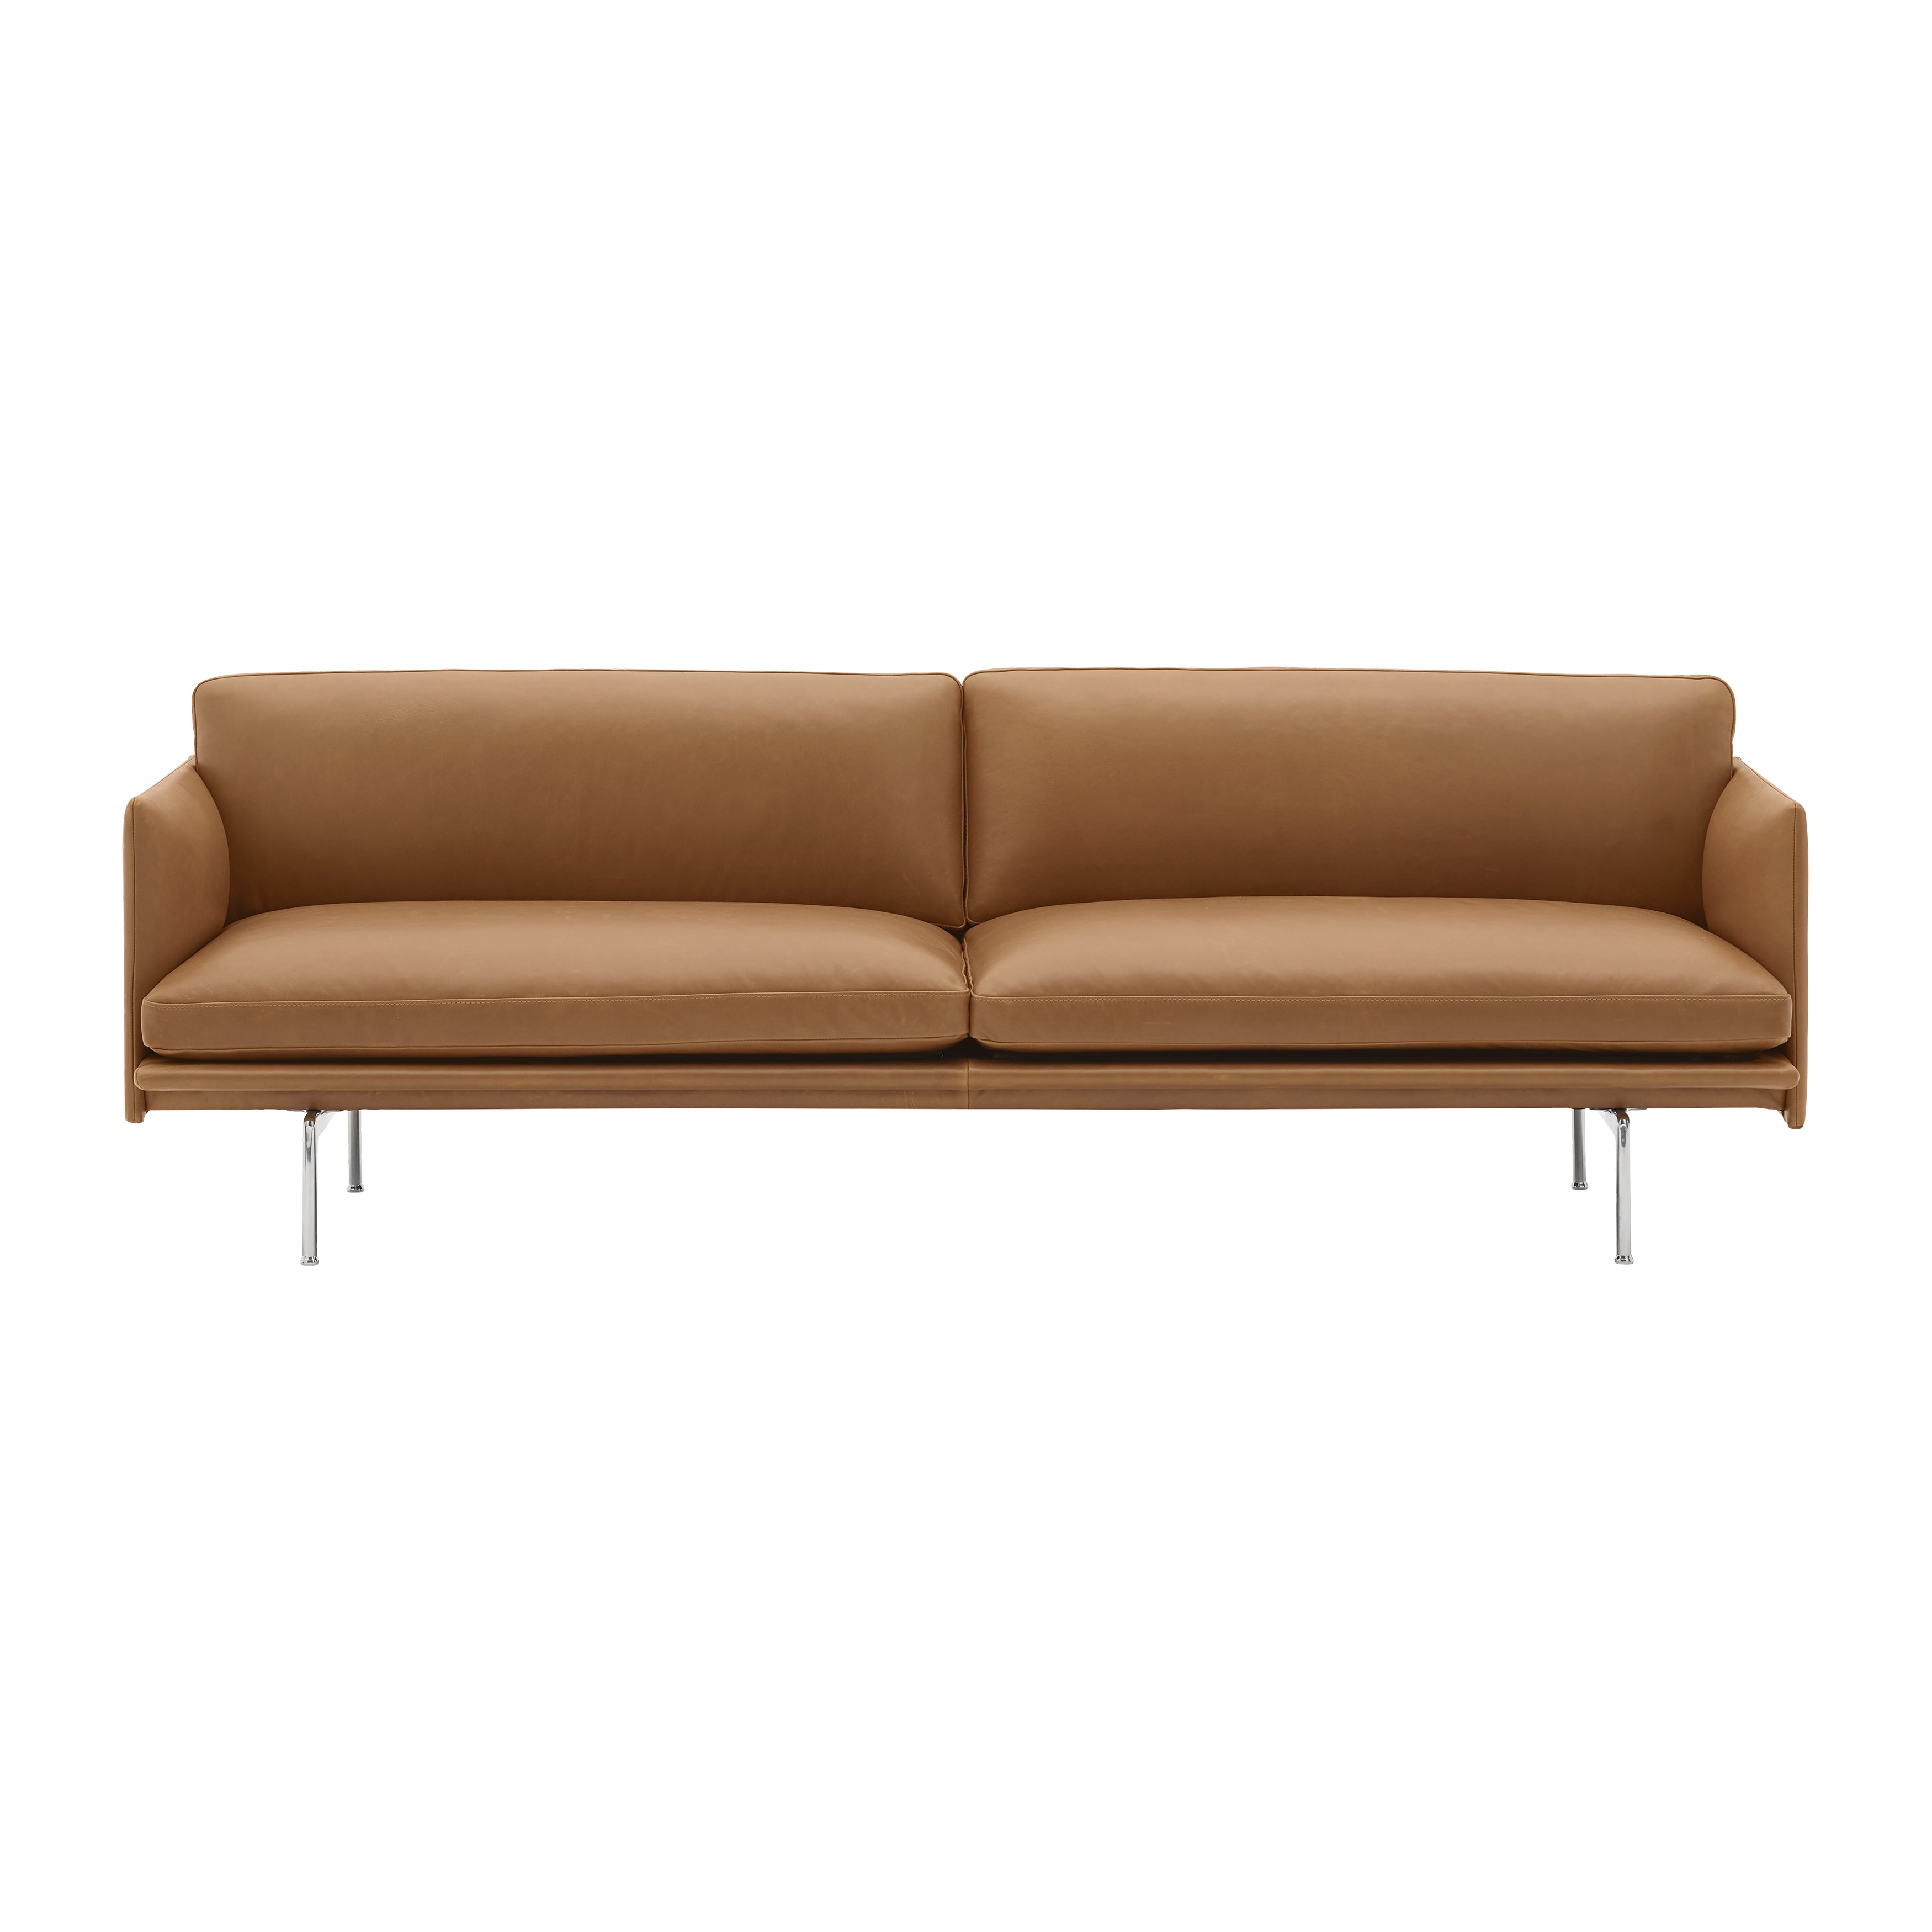 Outline Studio Sofa: Polished Aluminum + 86.6